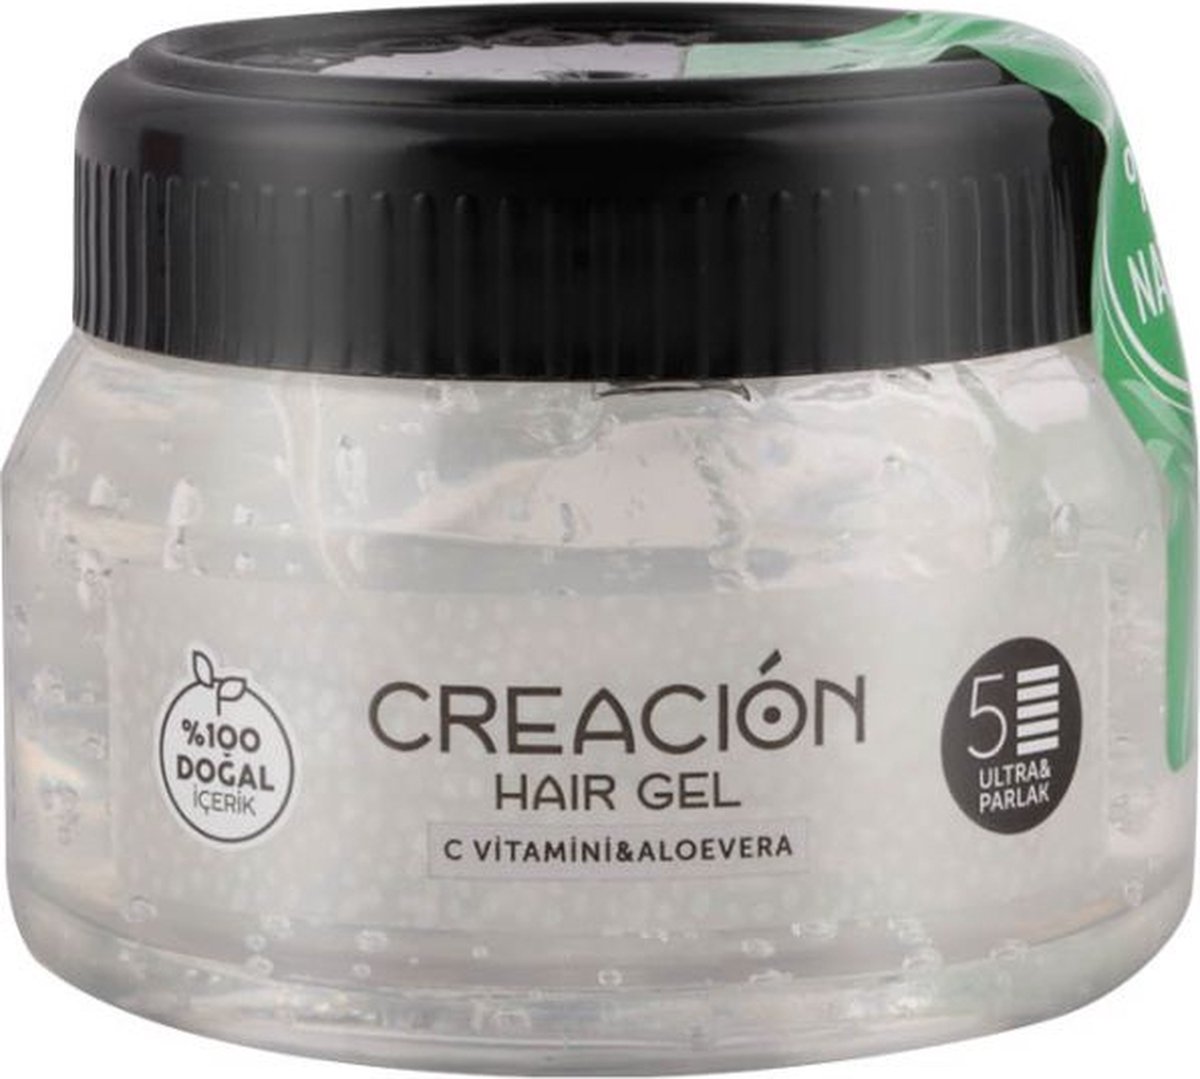 Creacion Hair Gel Vitamin C & Aloe Vera Ultra Parlak 500ml